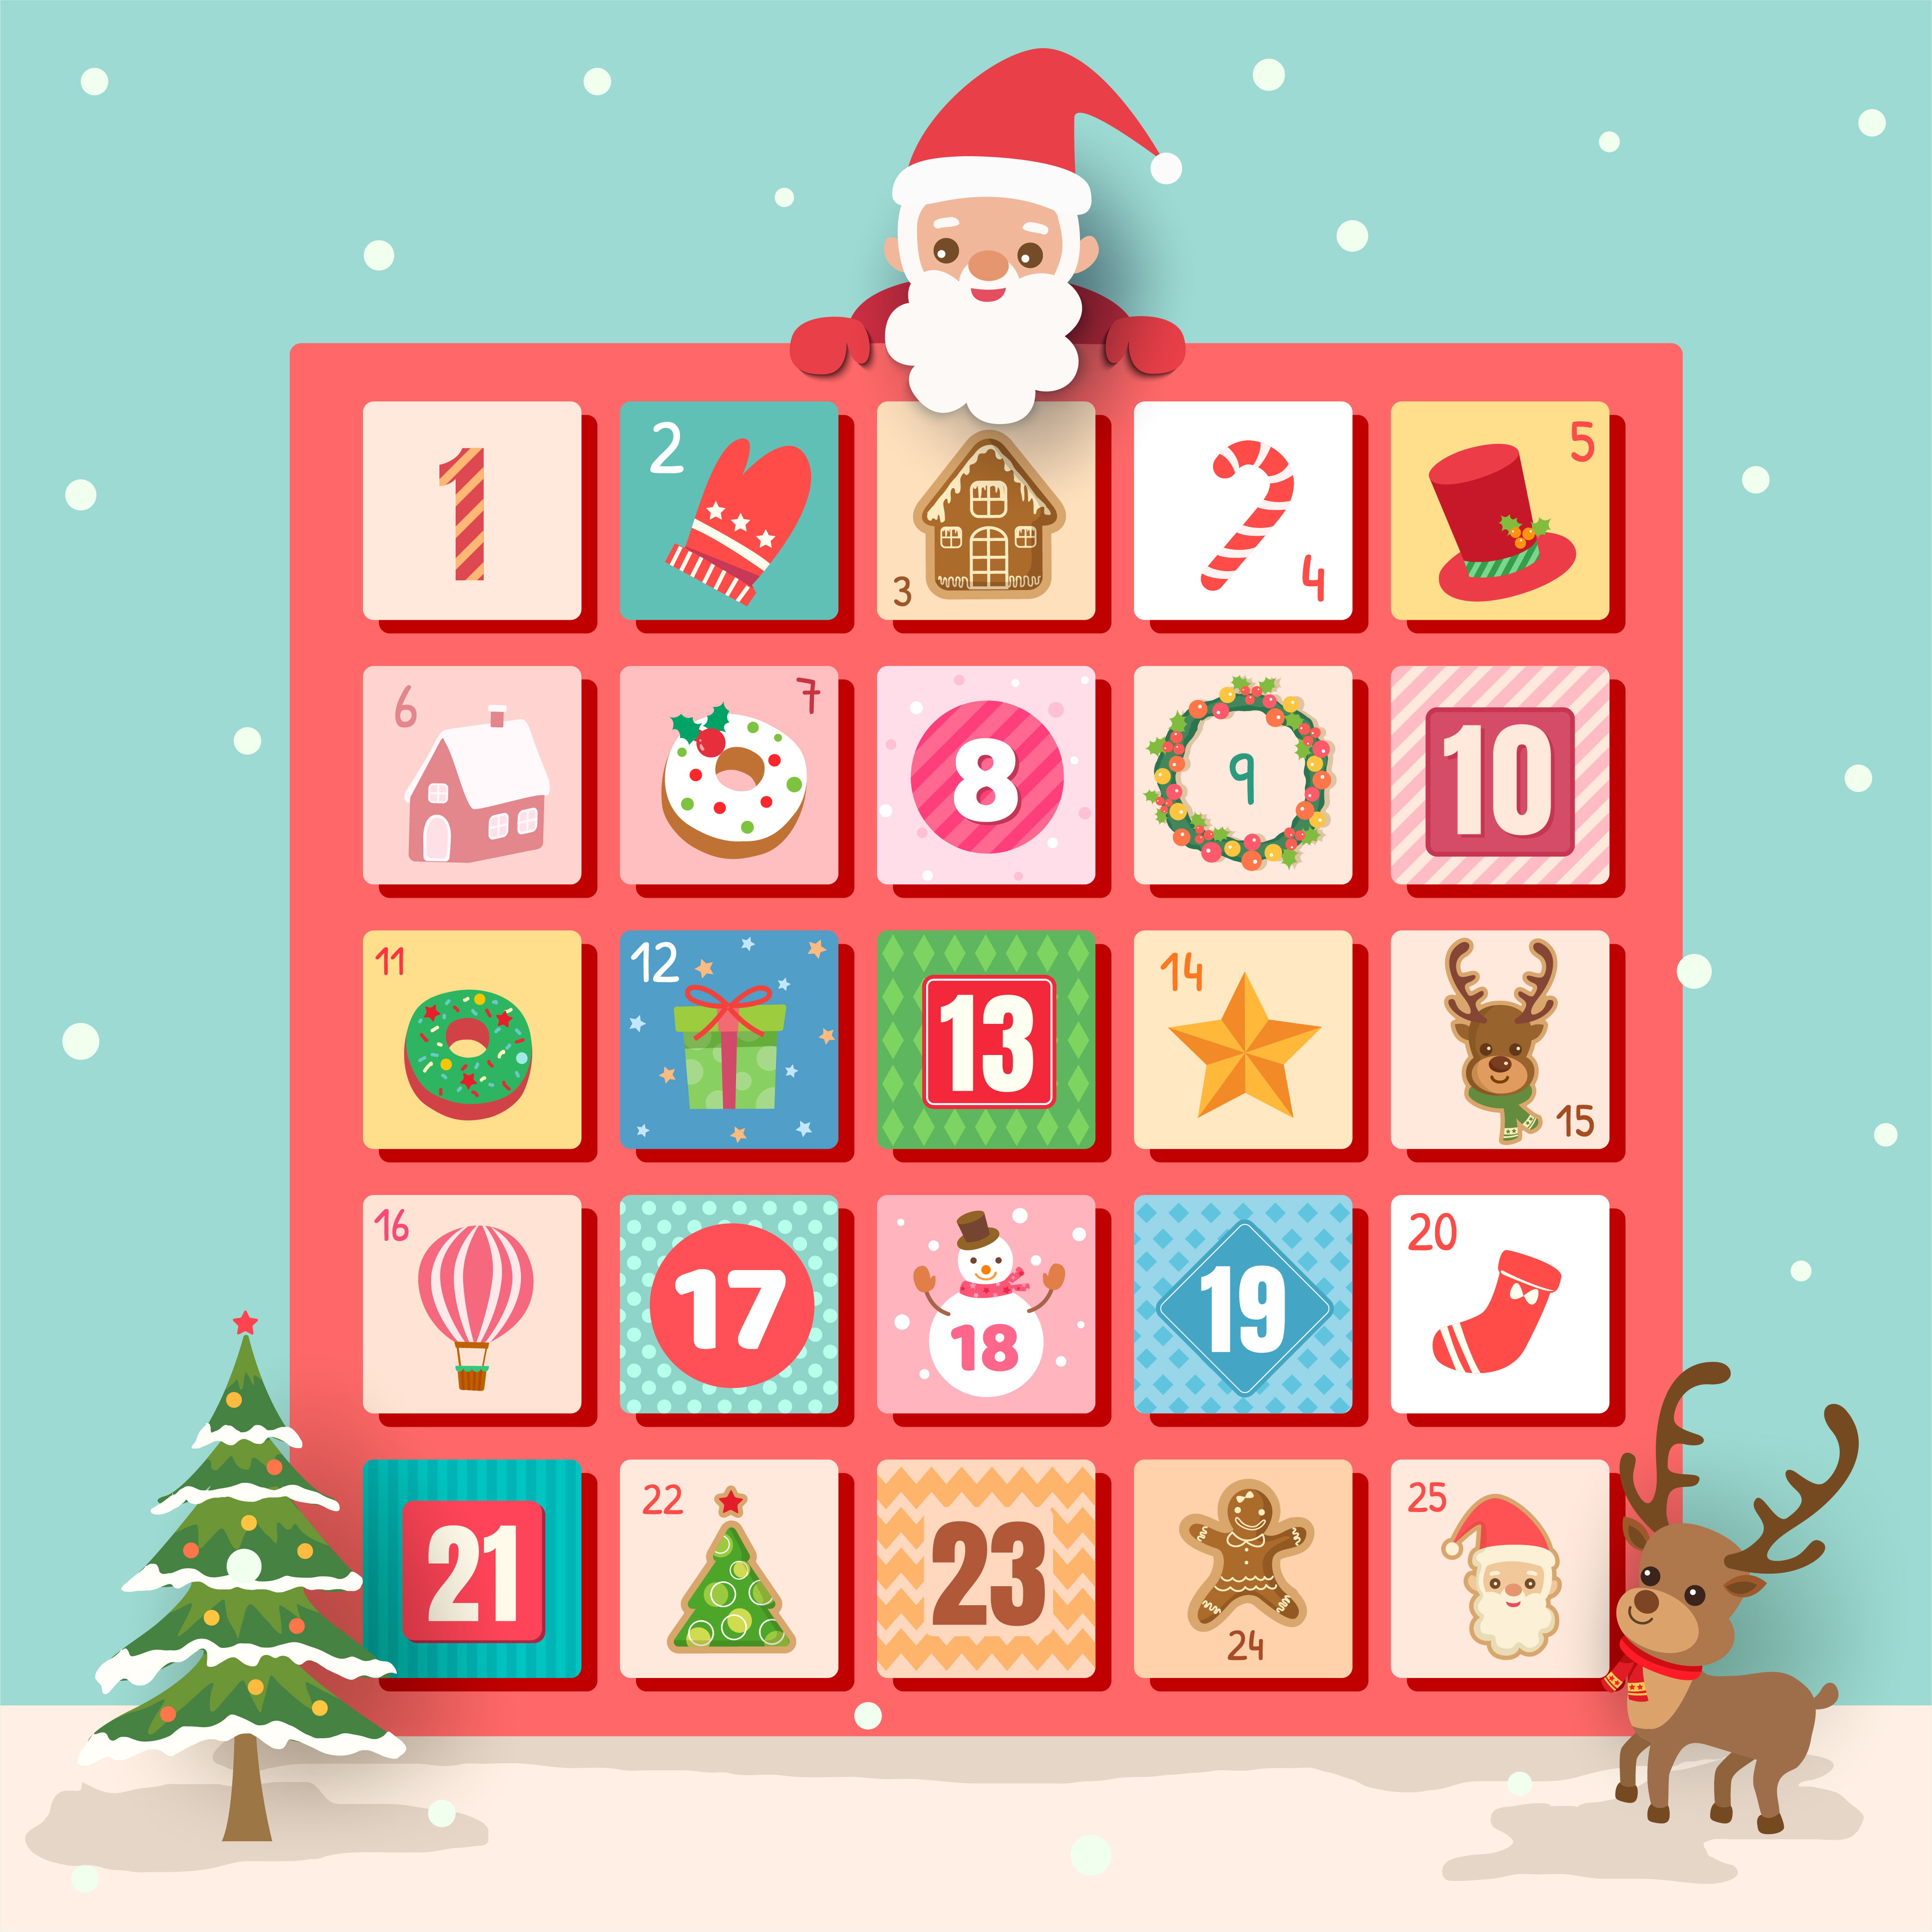 Advent calendar christmas background with santa claus